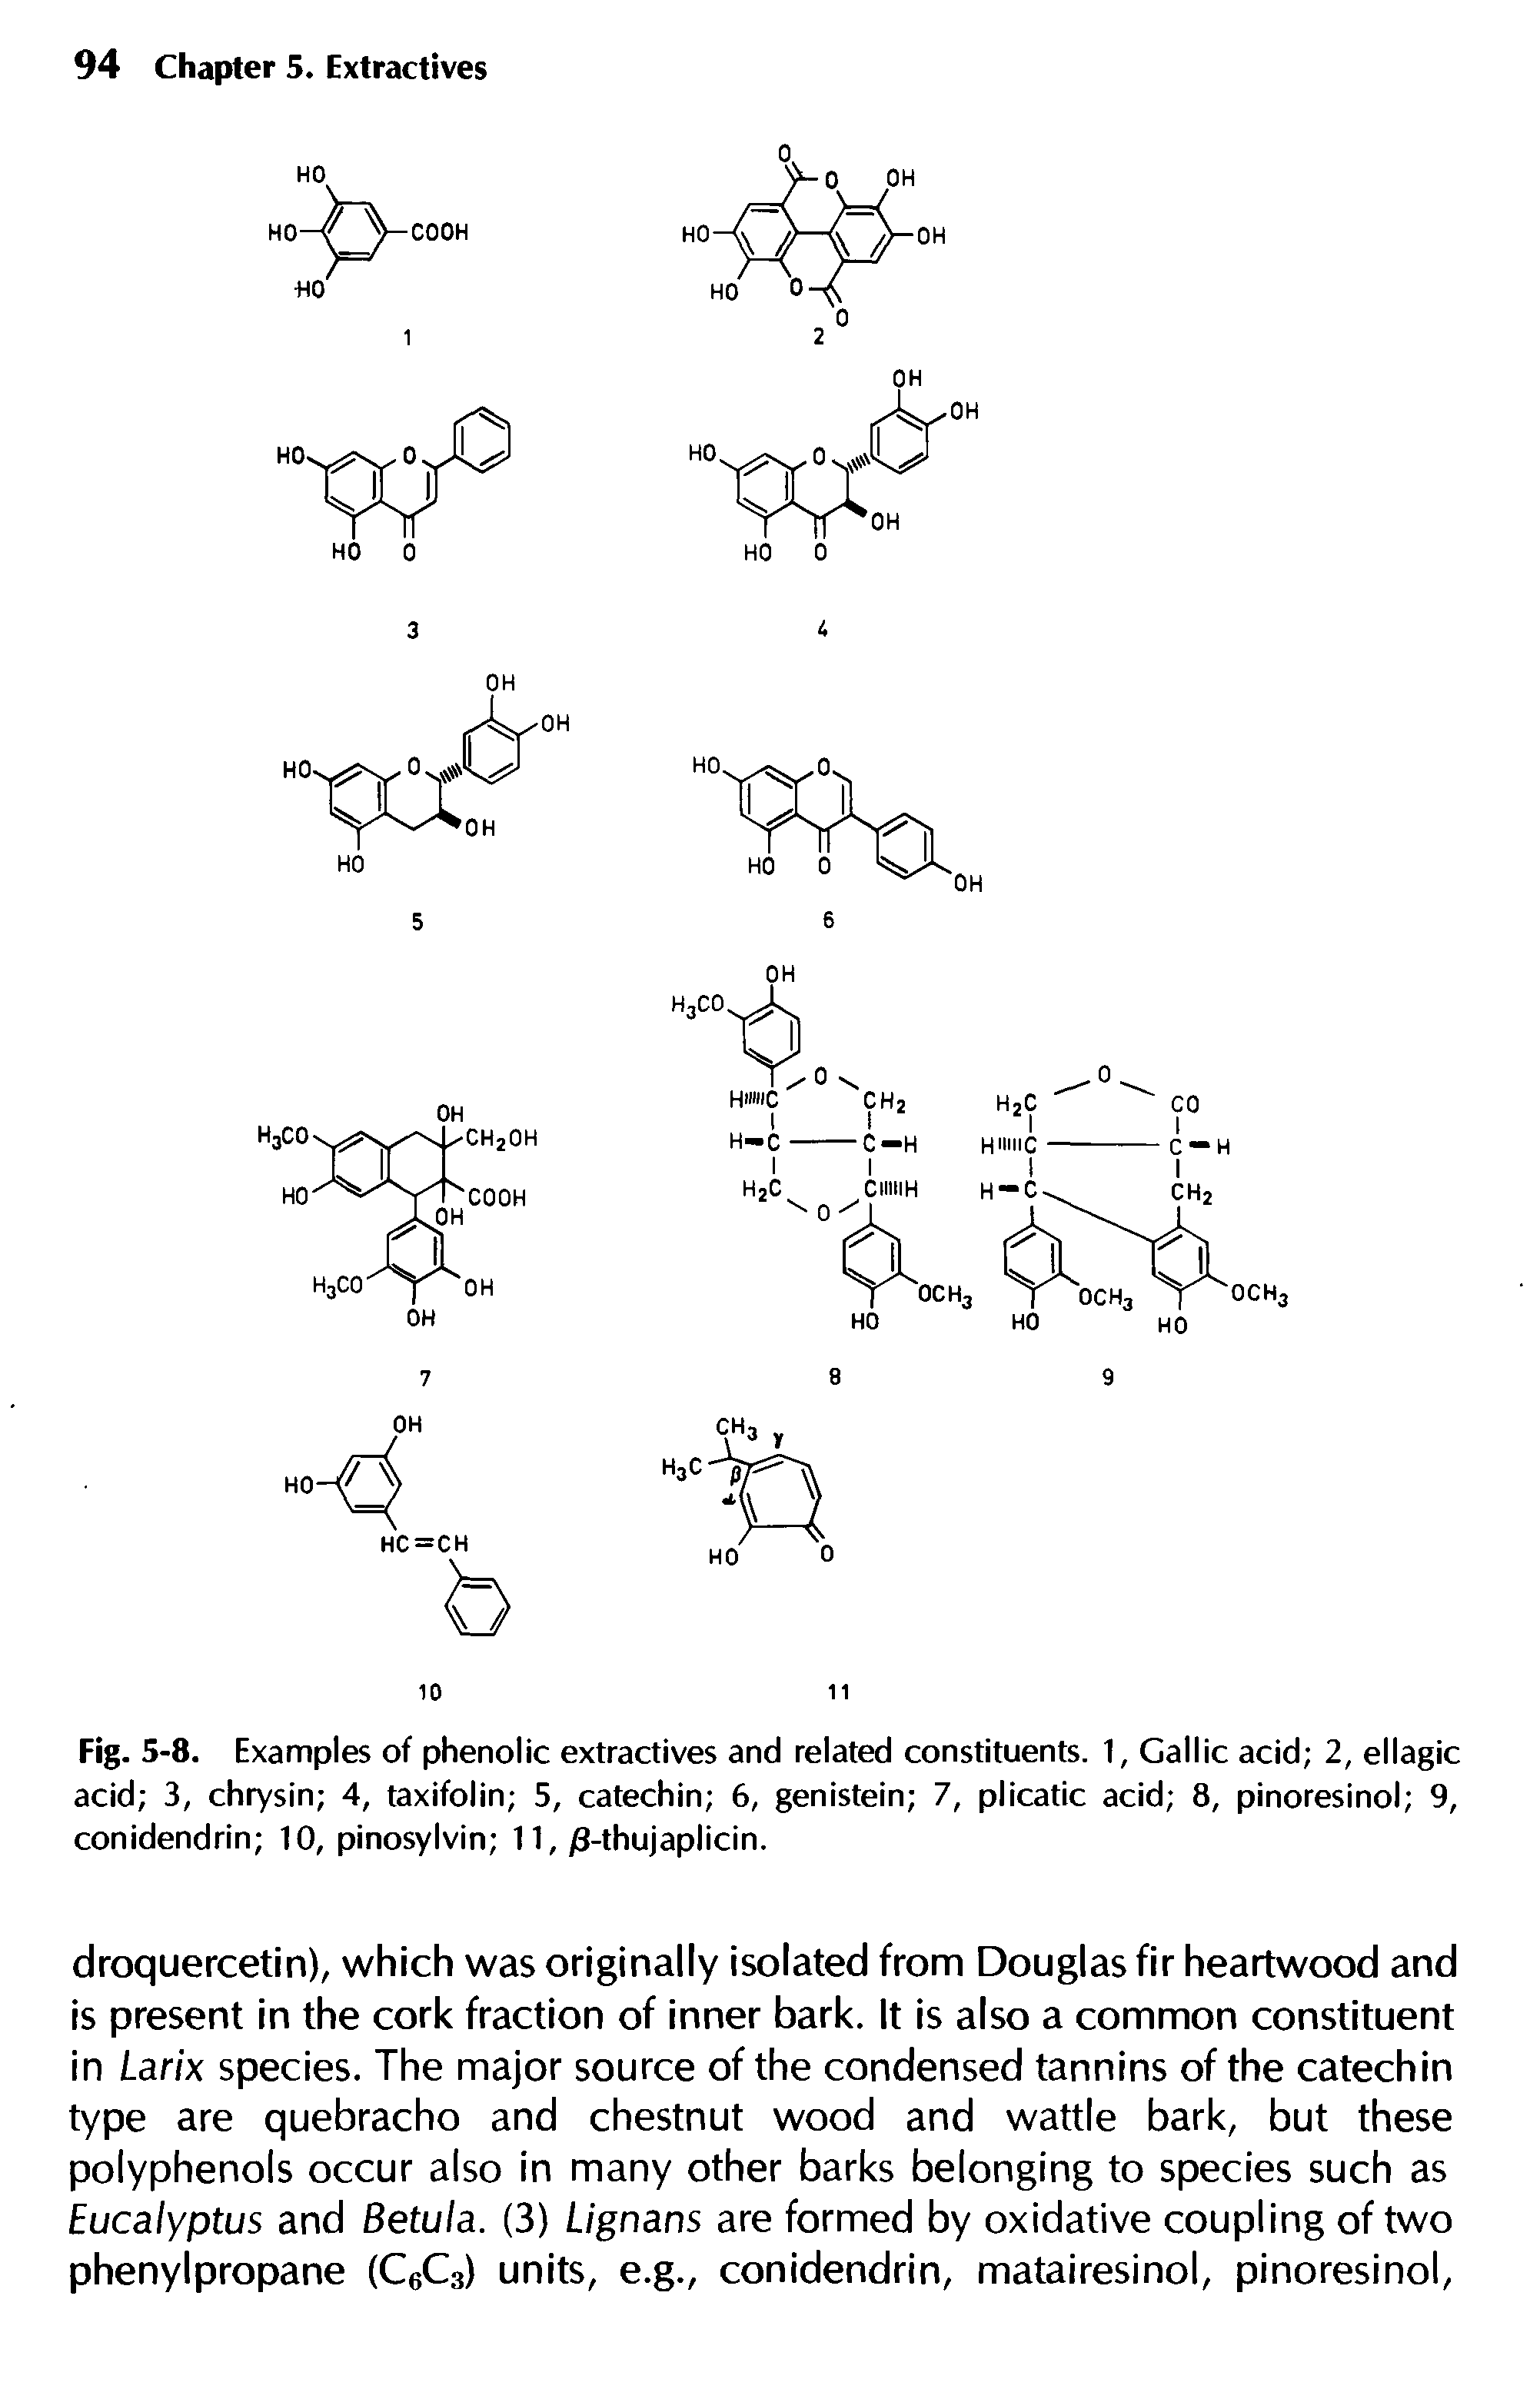 Fig. 5-8. Examples of phenolic extractives and related constituents. 1, Gallic acid 2, ellagic acid 3, chrysin 4, taxifolin 5, catechin 6, genistein 7, plicatic acid 8, pinoresinol 9, conidendrin 10, pinosylvin 11, /3-thujaplicin.